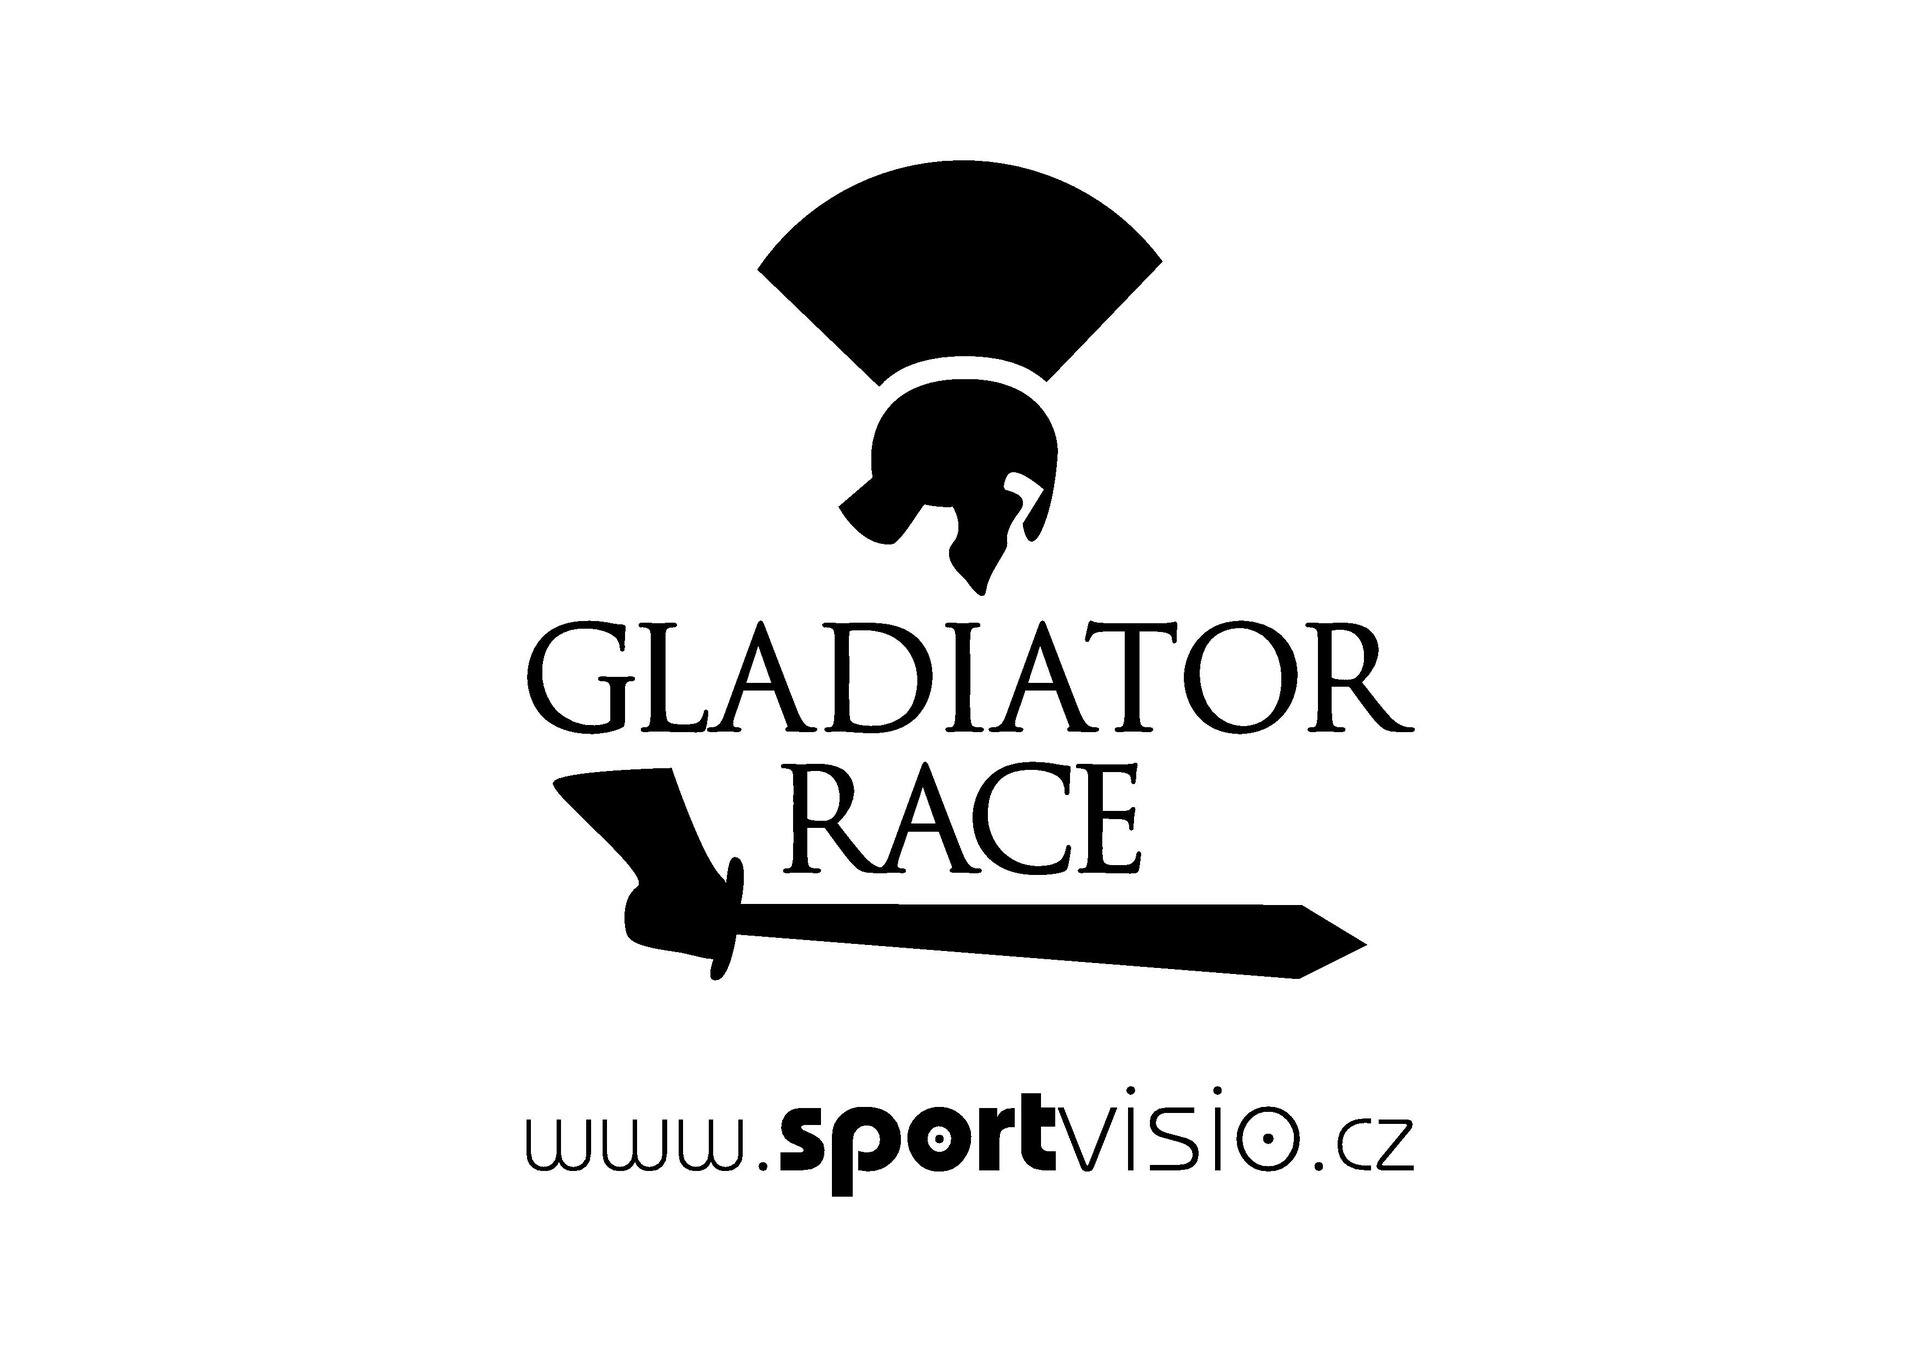 Gladiator race